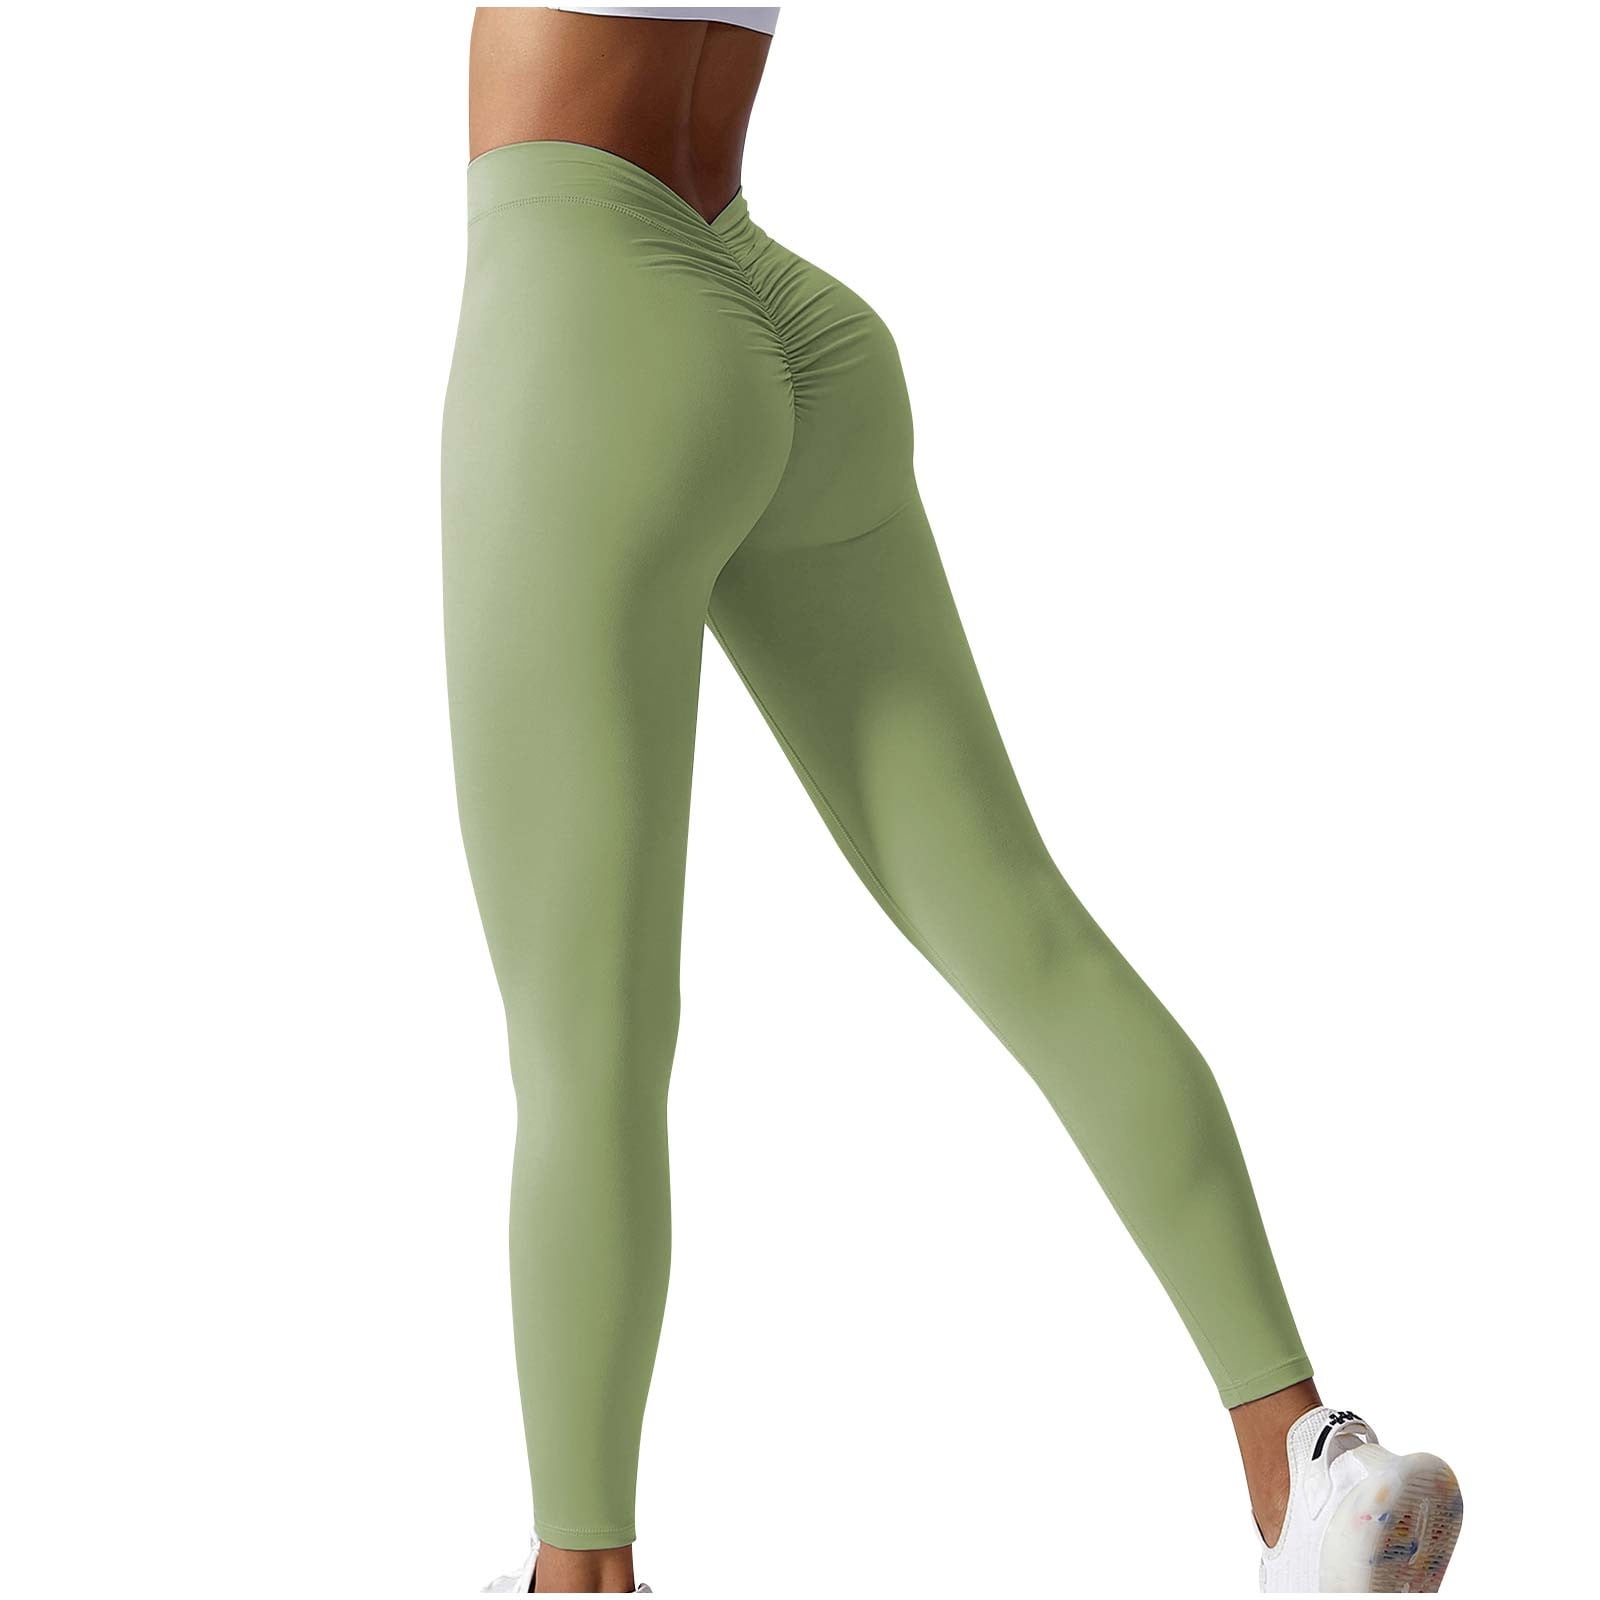 XFLWAM Butt Leggings with Pockets for Women High Waist Cargo Pants Work Pants  Gym Workout Leggings Dark Gray XS 